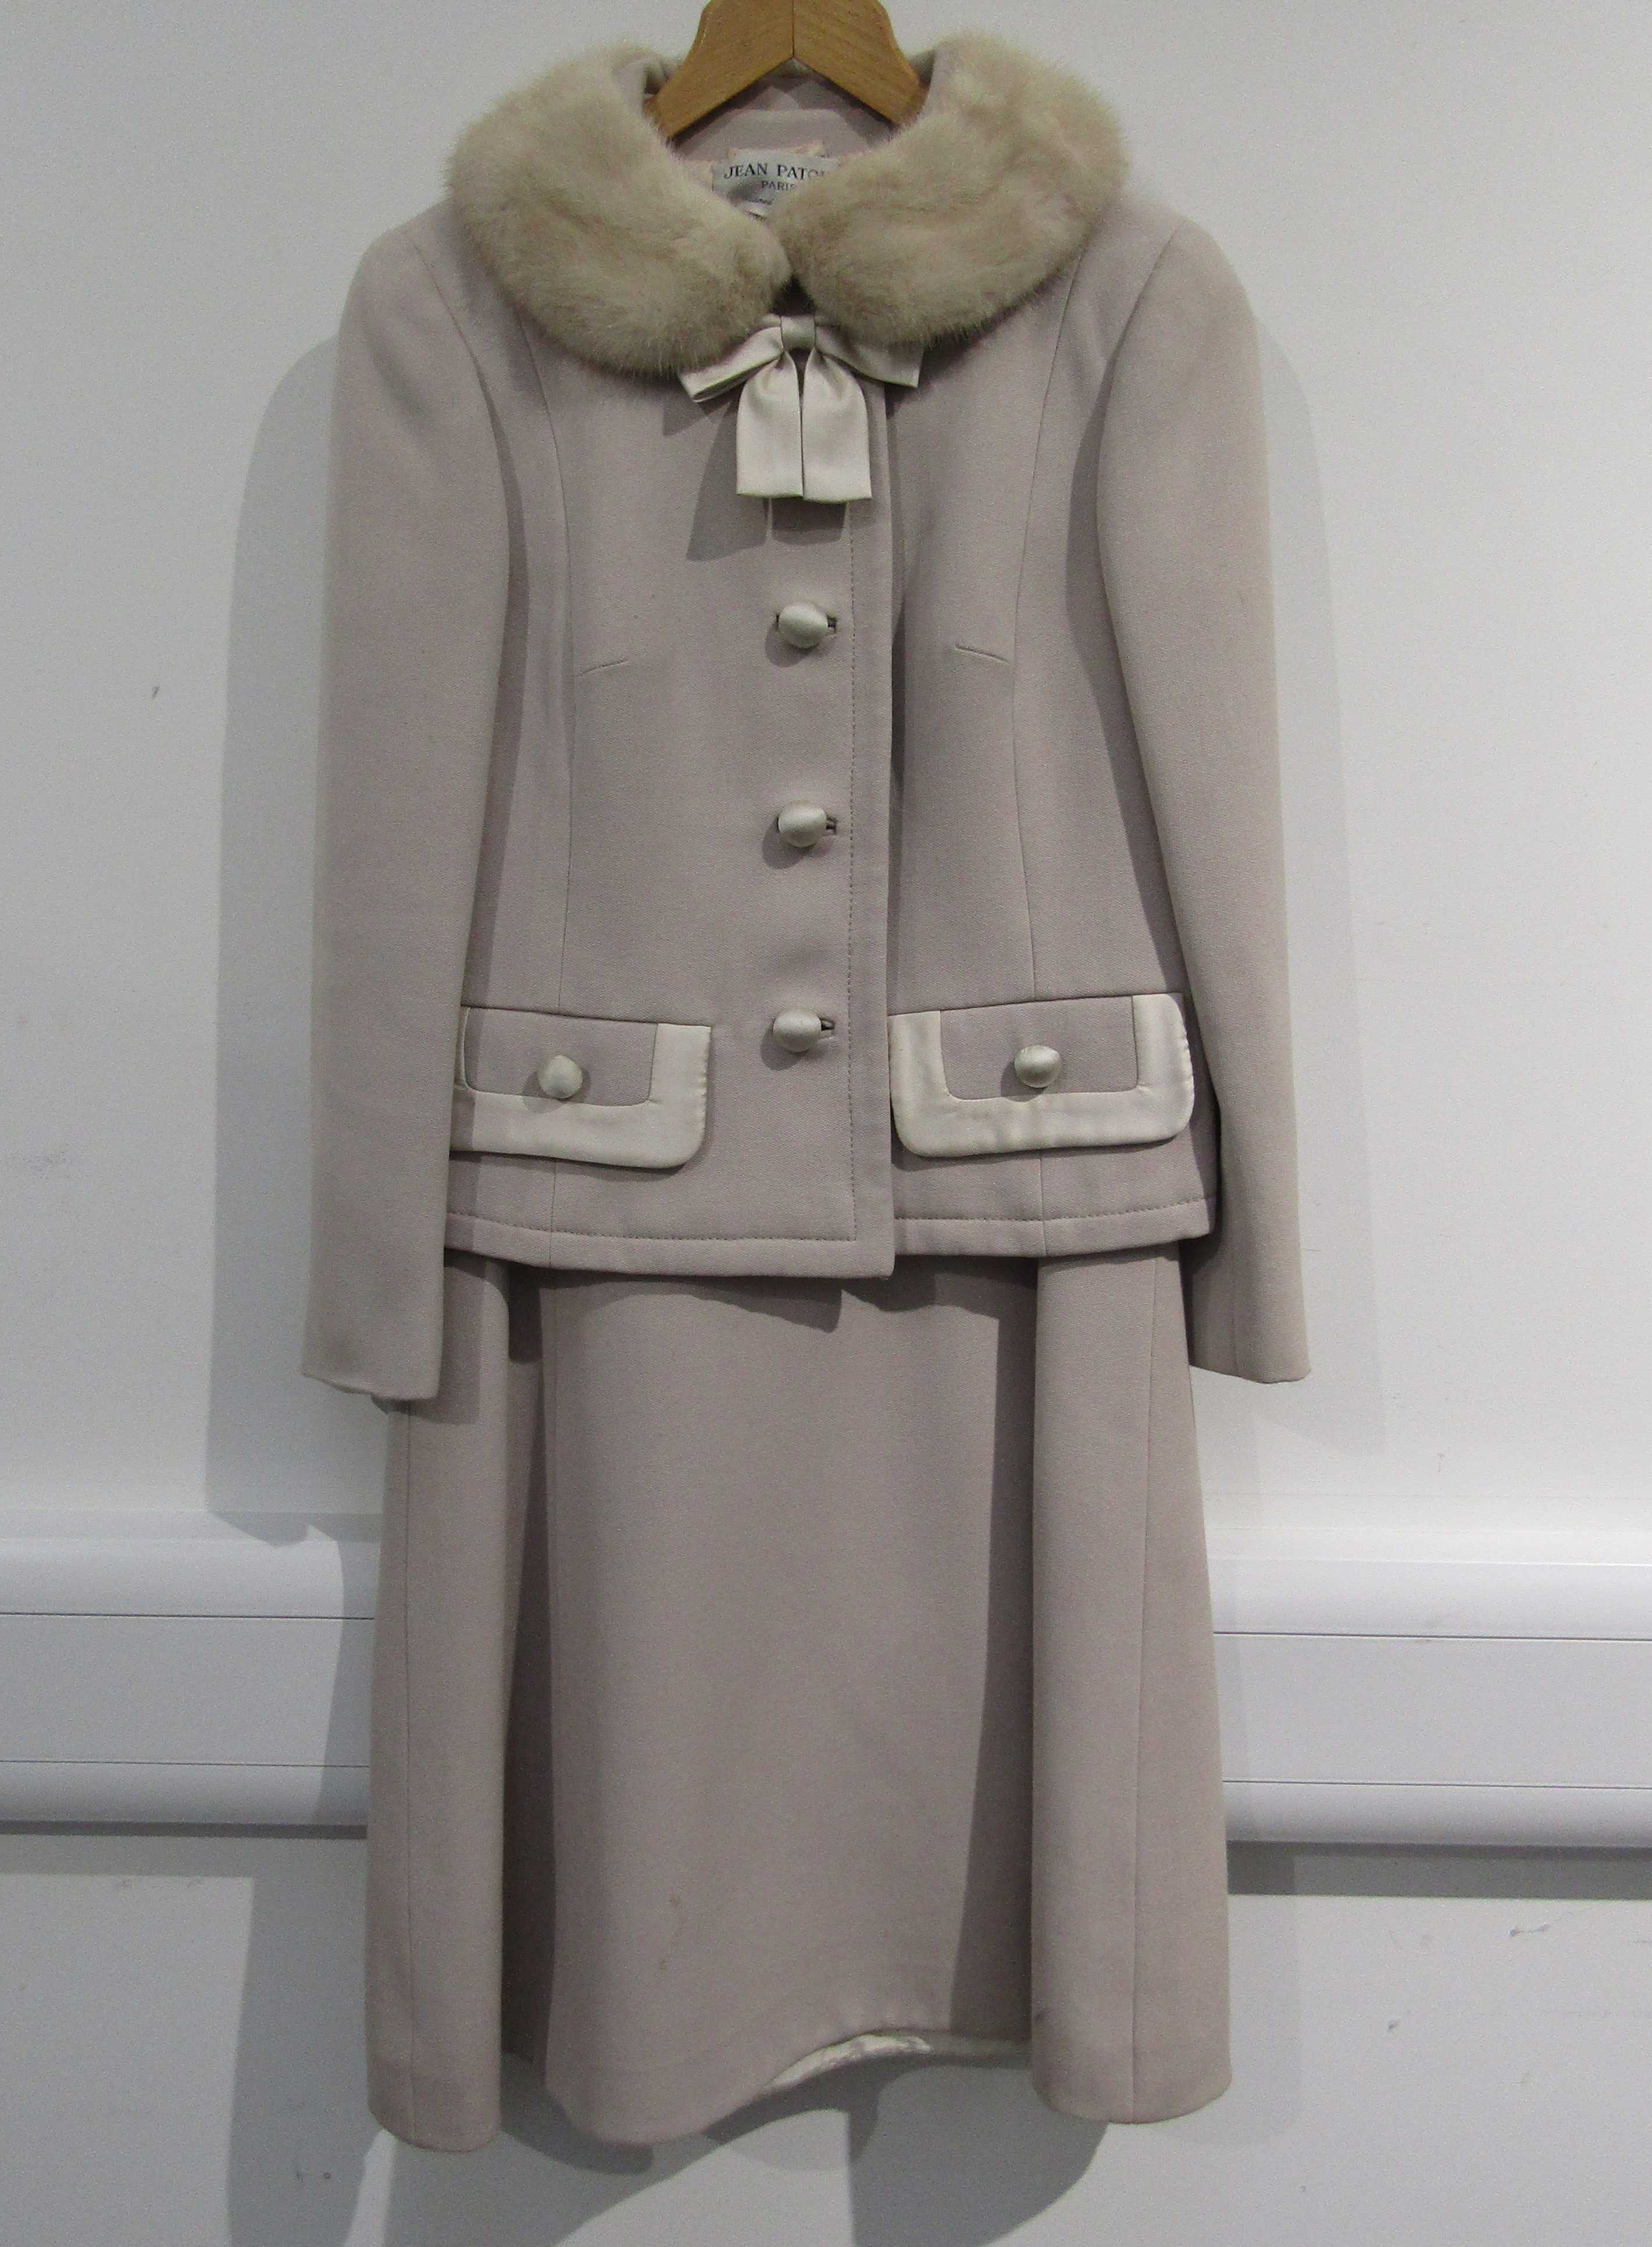 Jean Patou Paris classic light beige wool two piece dress and jacket suit, - Image 7 of 10